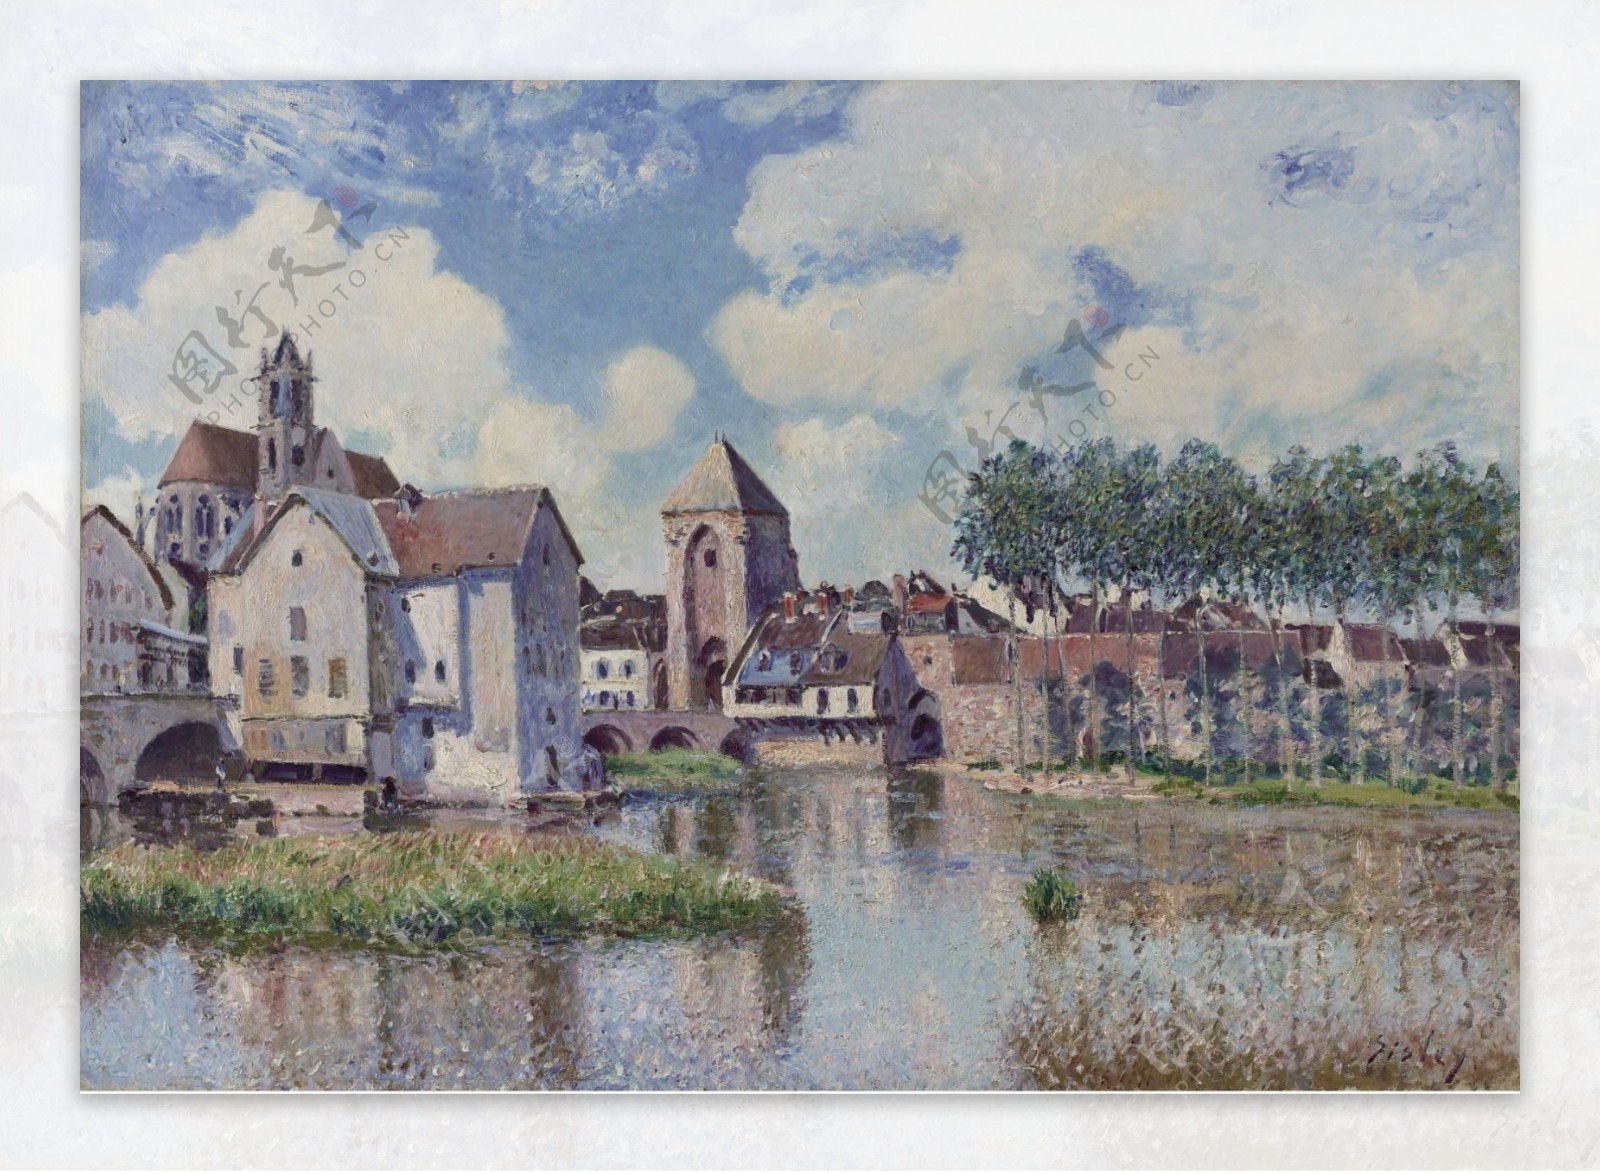 AlfredSisleyMoretsurLoing1891法国画家阿尔弗莱德西斯莱alfredsisley印象派自然风景天空油画装饰画